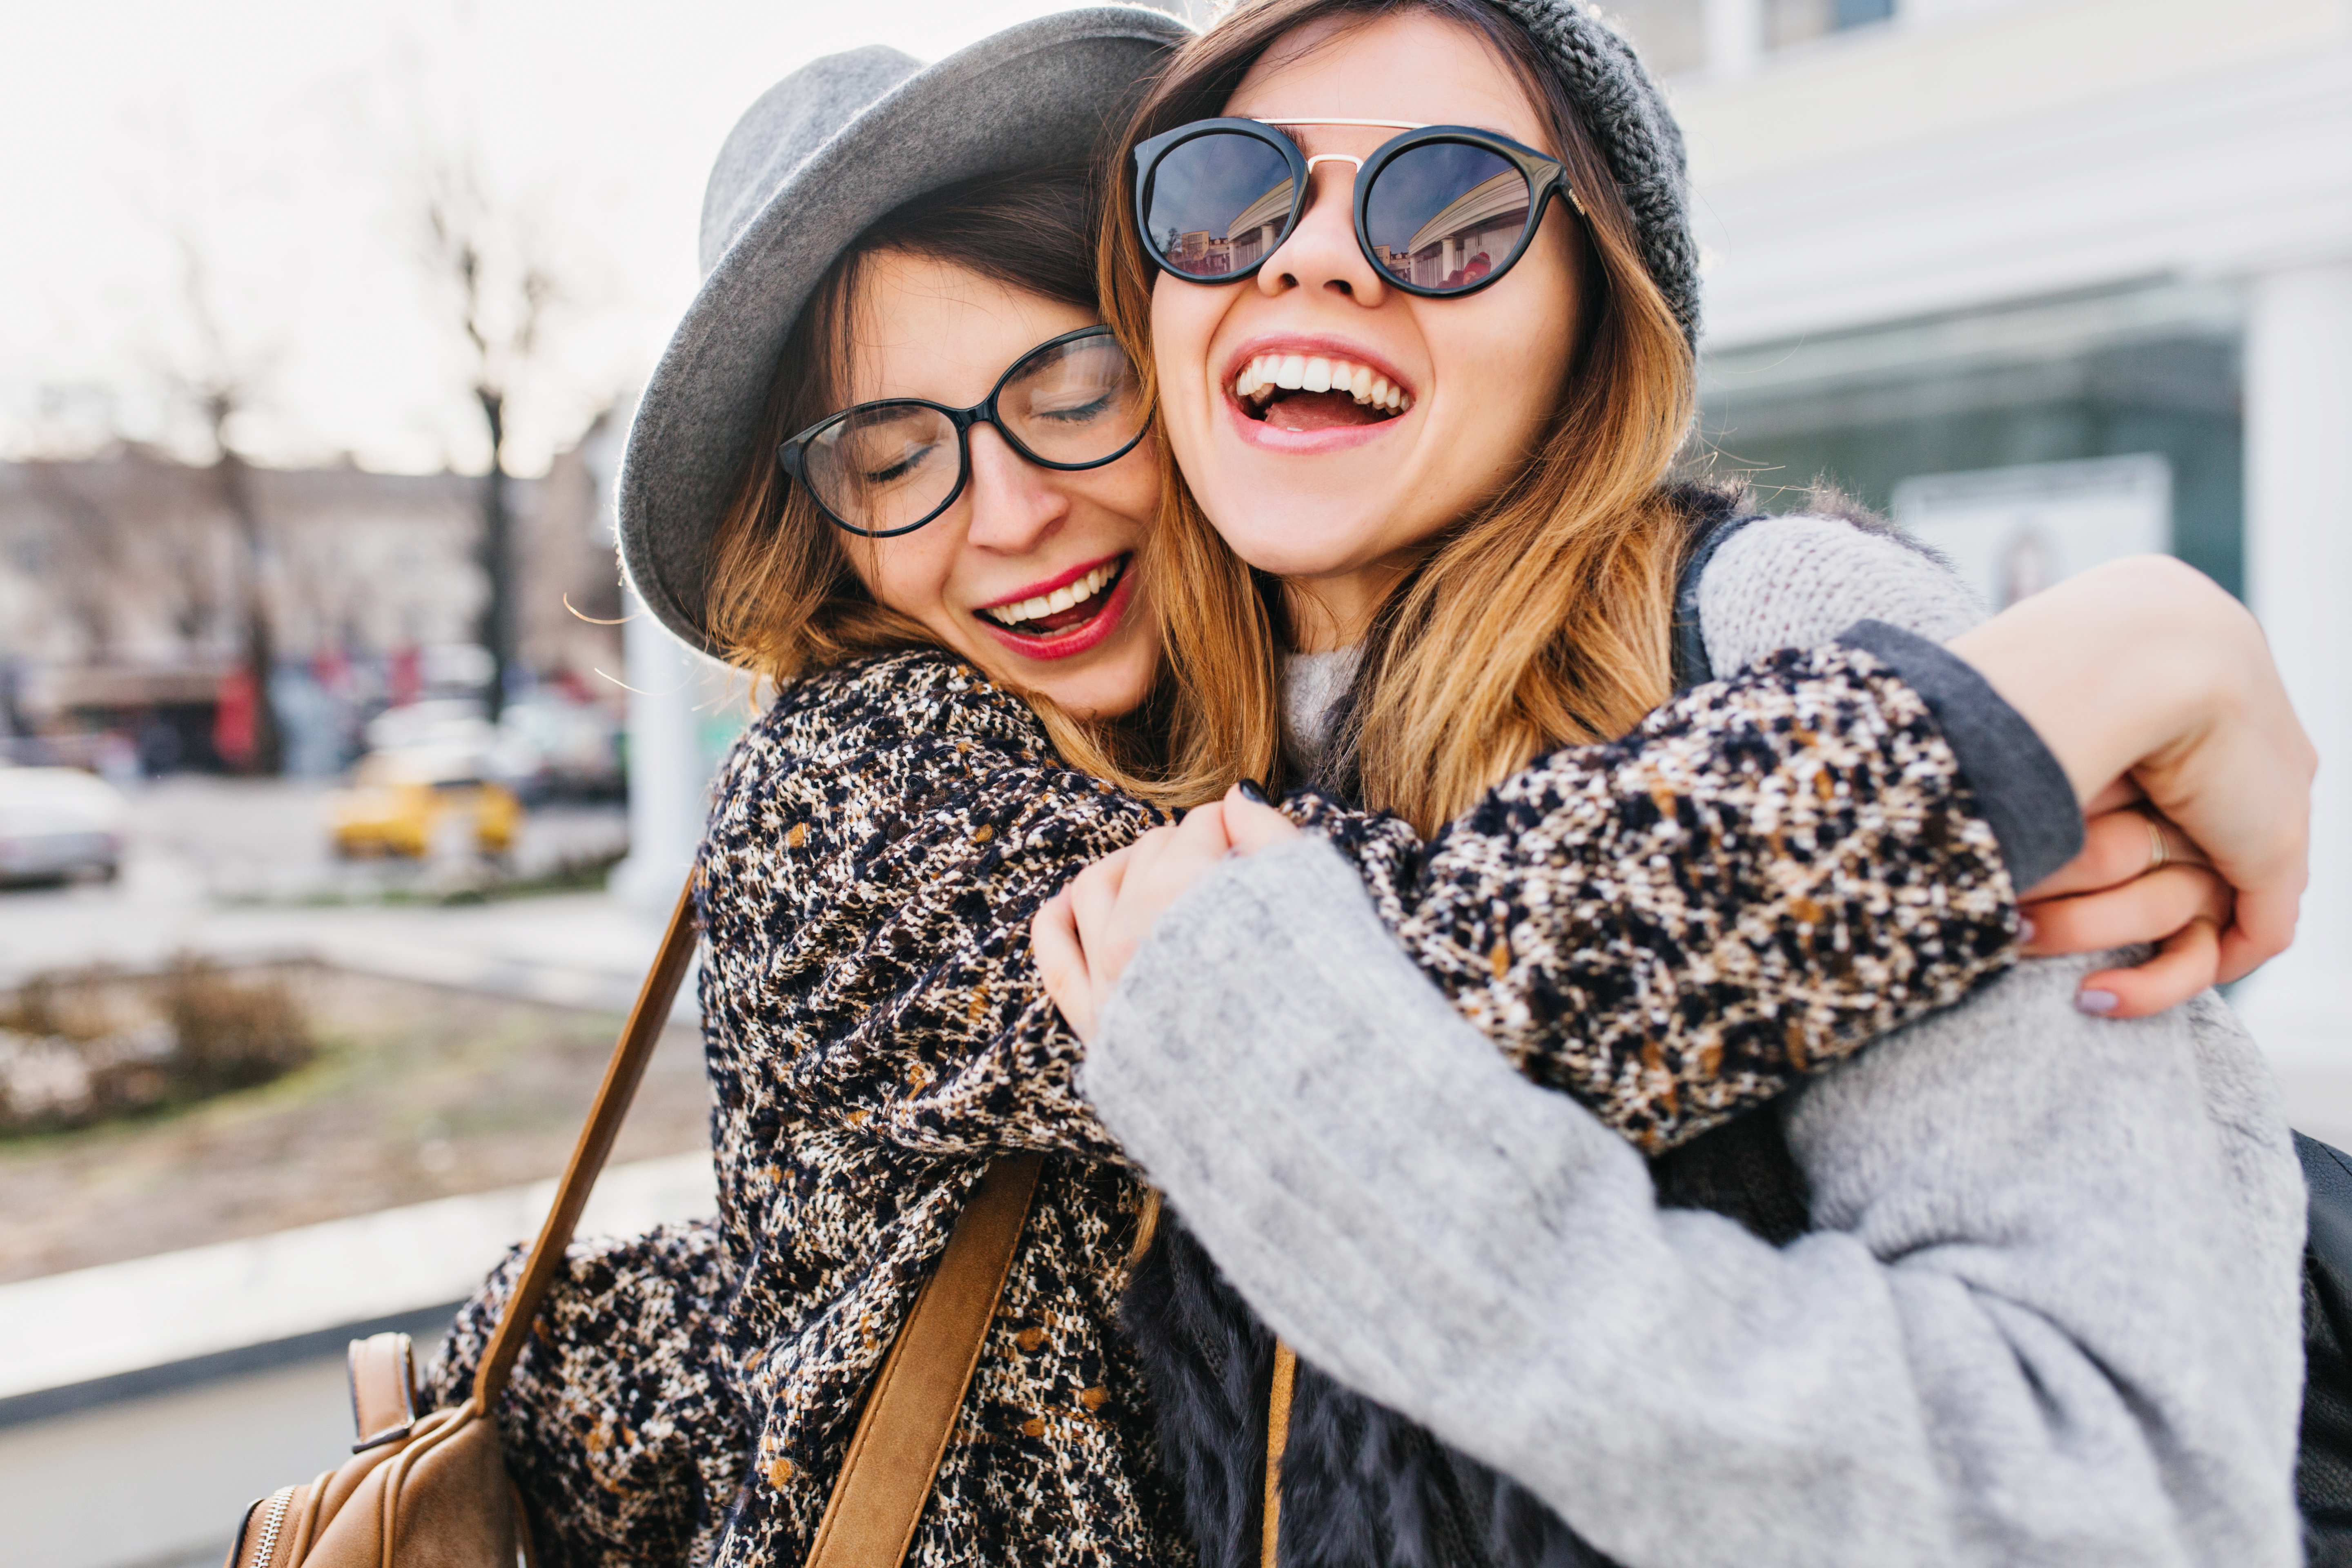 Two happy women hugging | Source: Shutterstock